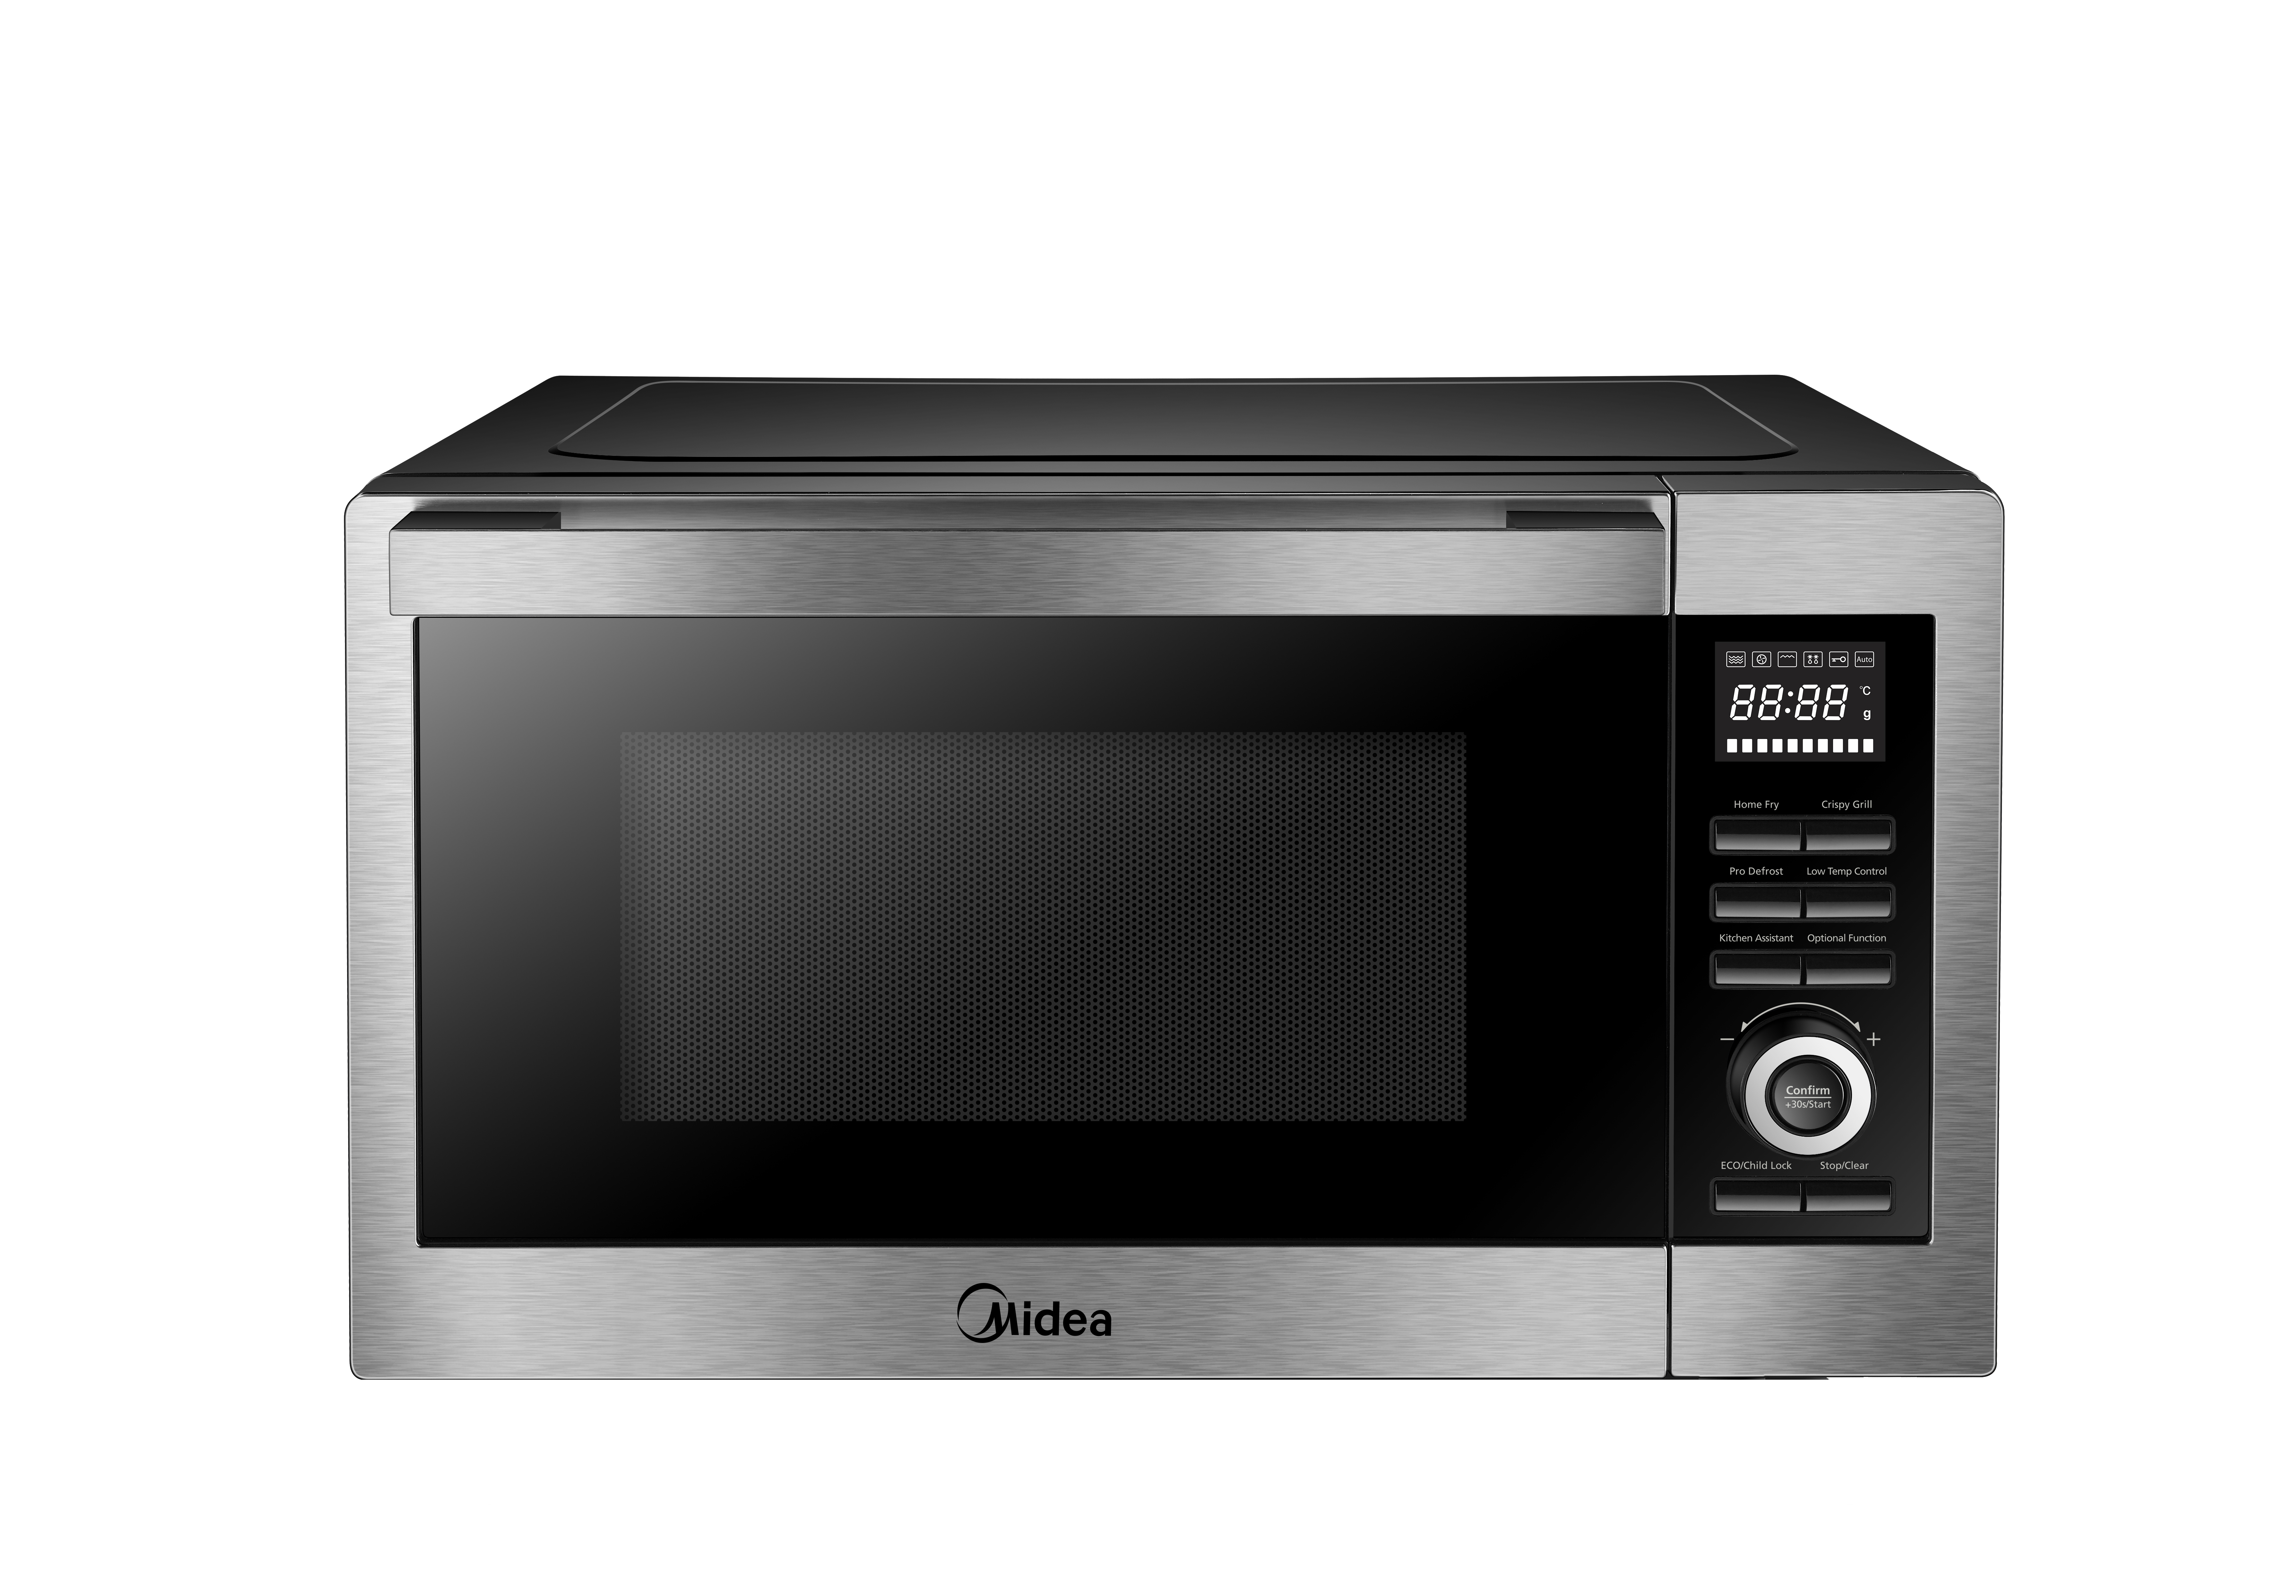 https://www.midea.com/content/dam/midea-aem/global/kitchen-appliances/microwave-oven/versaplus-microwave-oven/gallery1.png